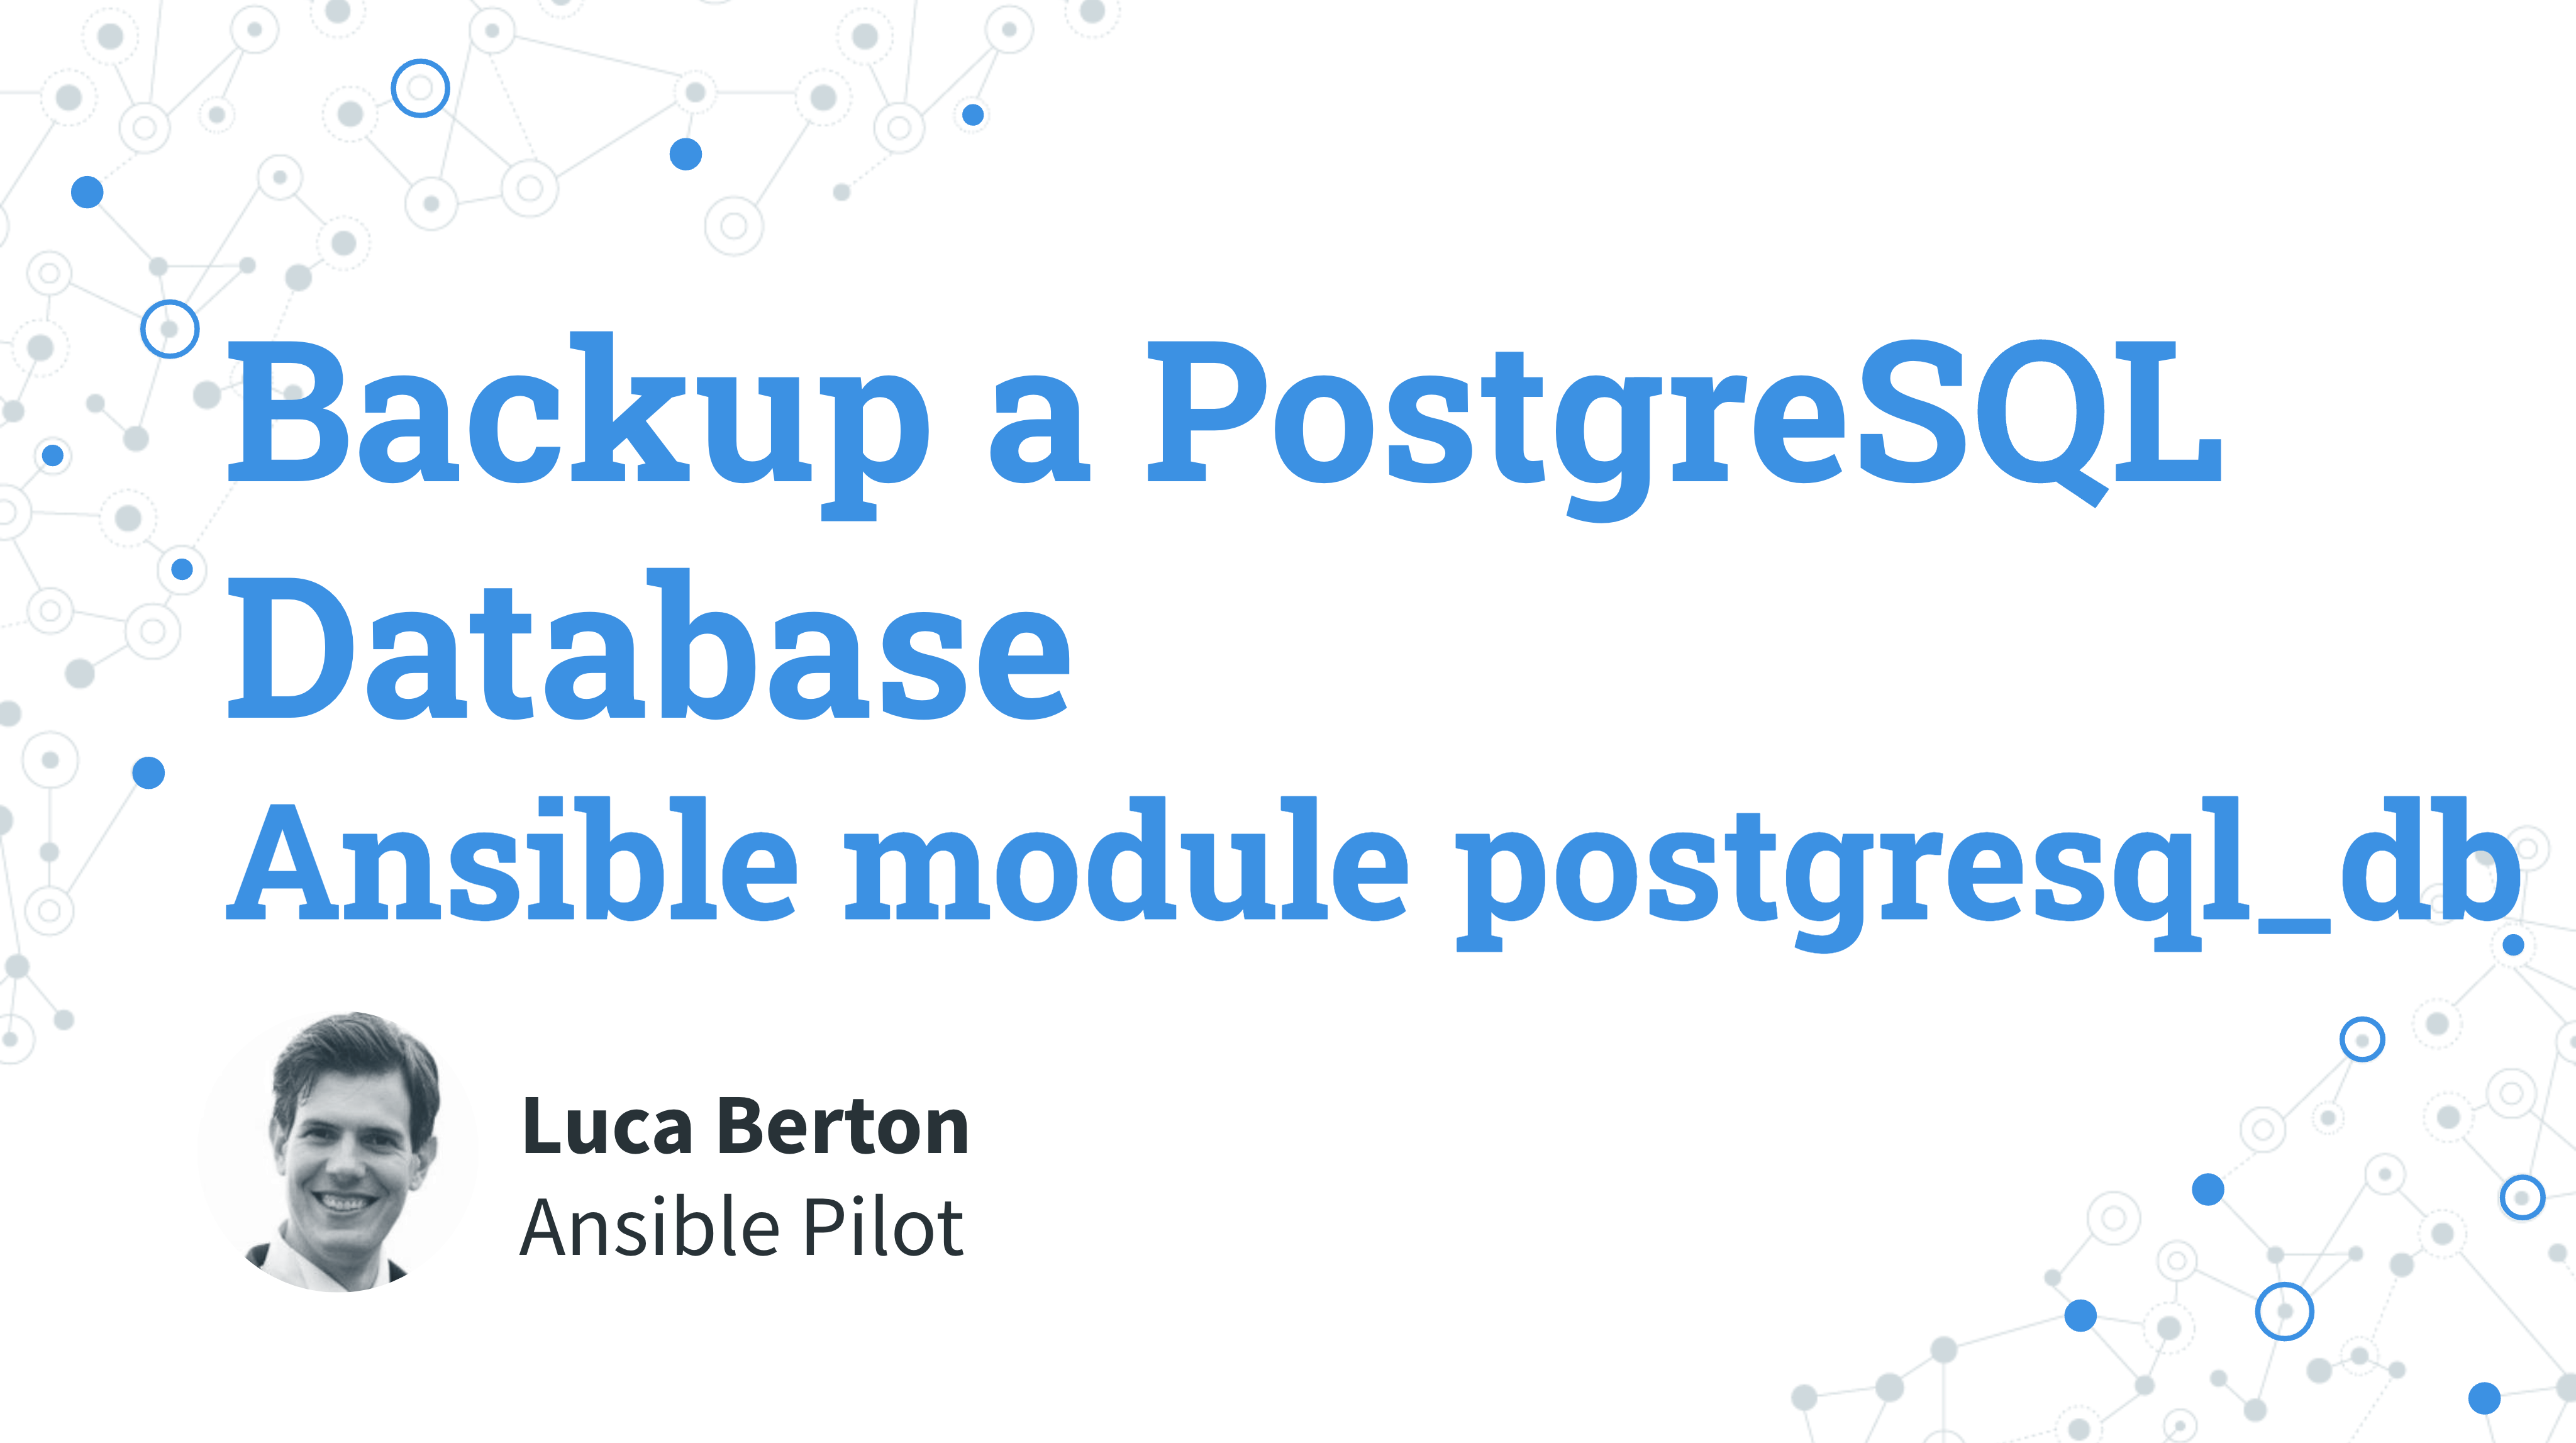 Backup a PostgreSQL Database - Ansible module postgresql_db